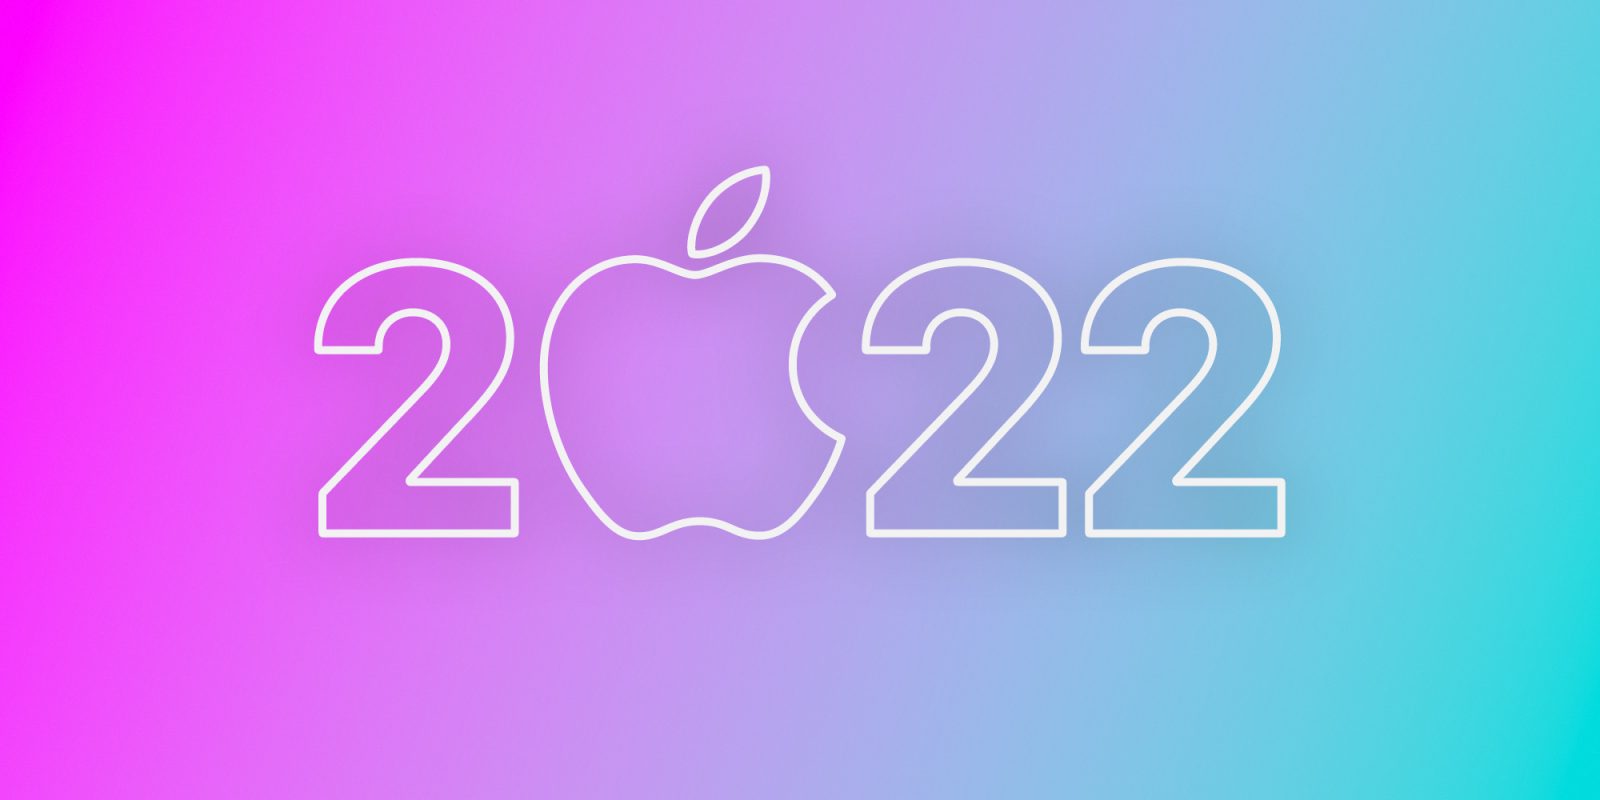 apple-2022-02.jpg?quality=82&strip=all&w